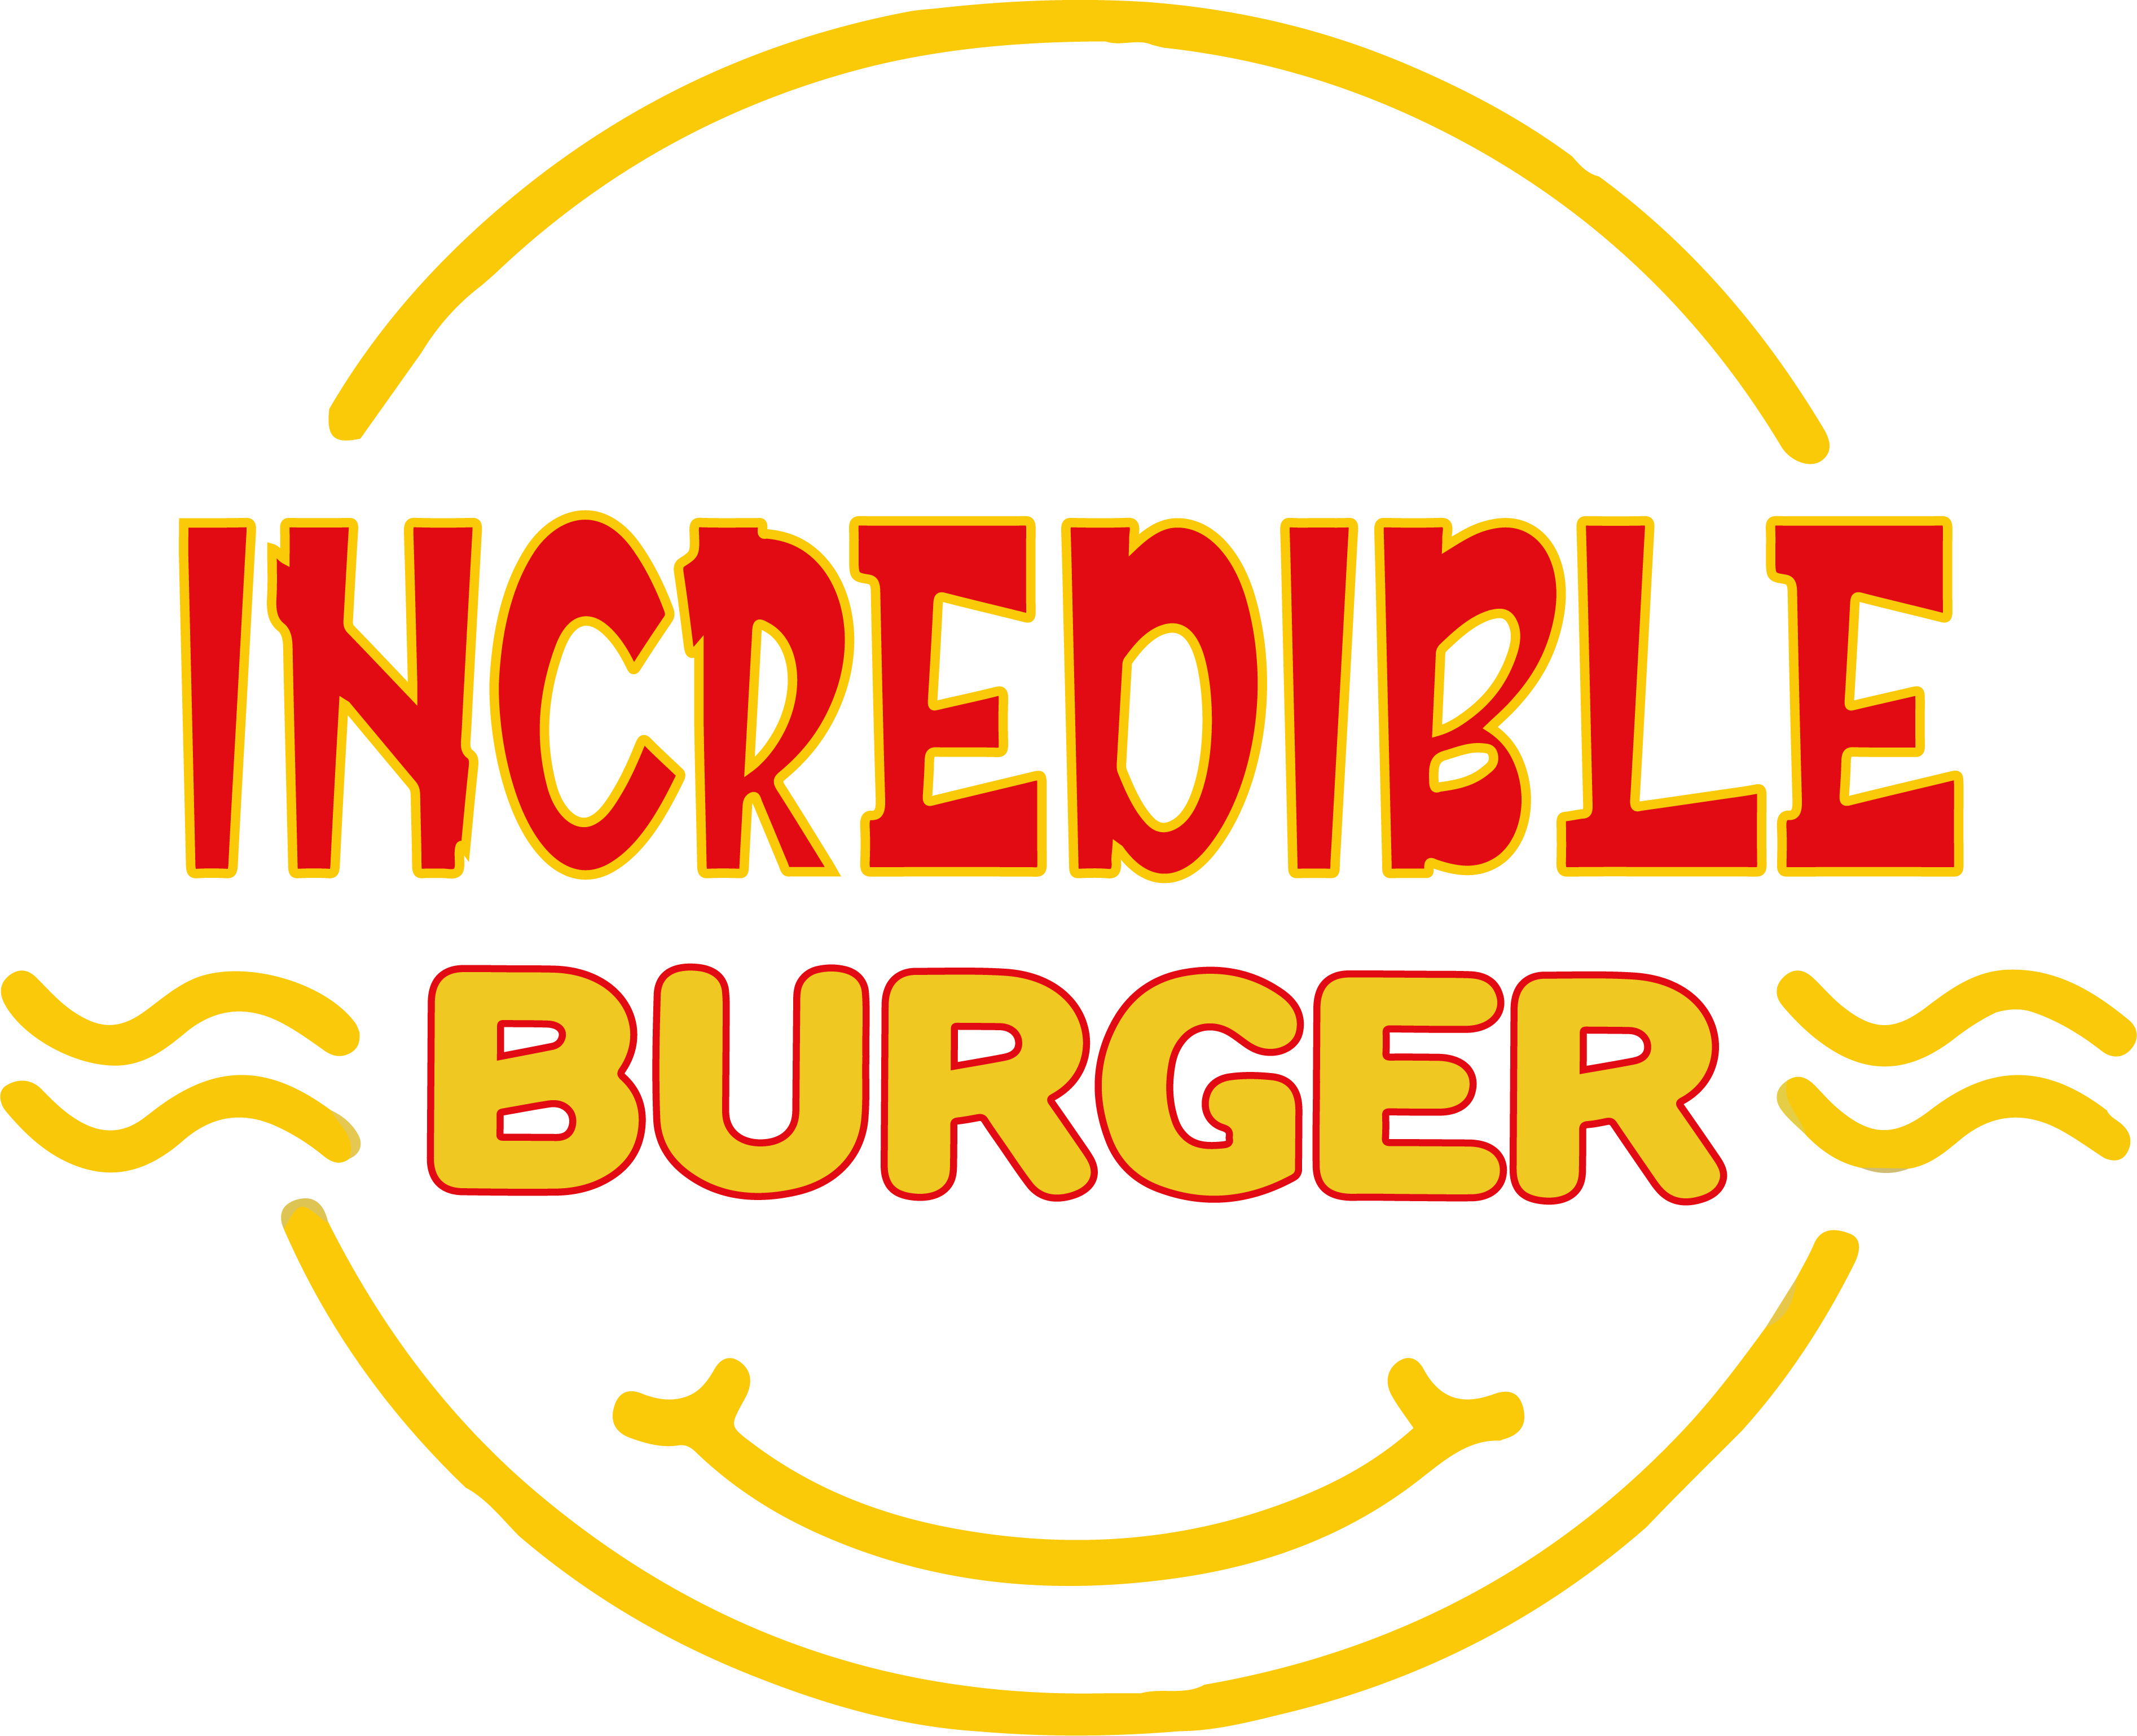 Incredible Burger logo